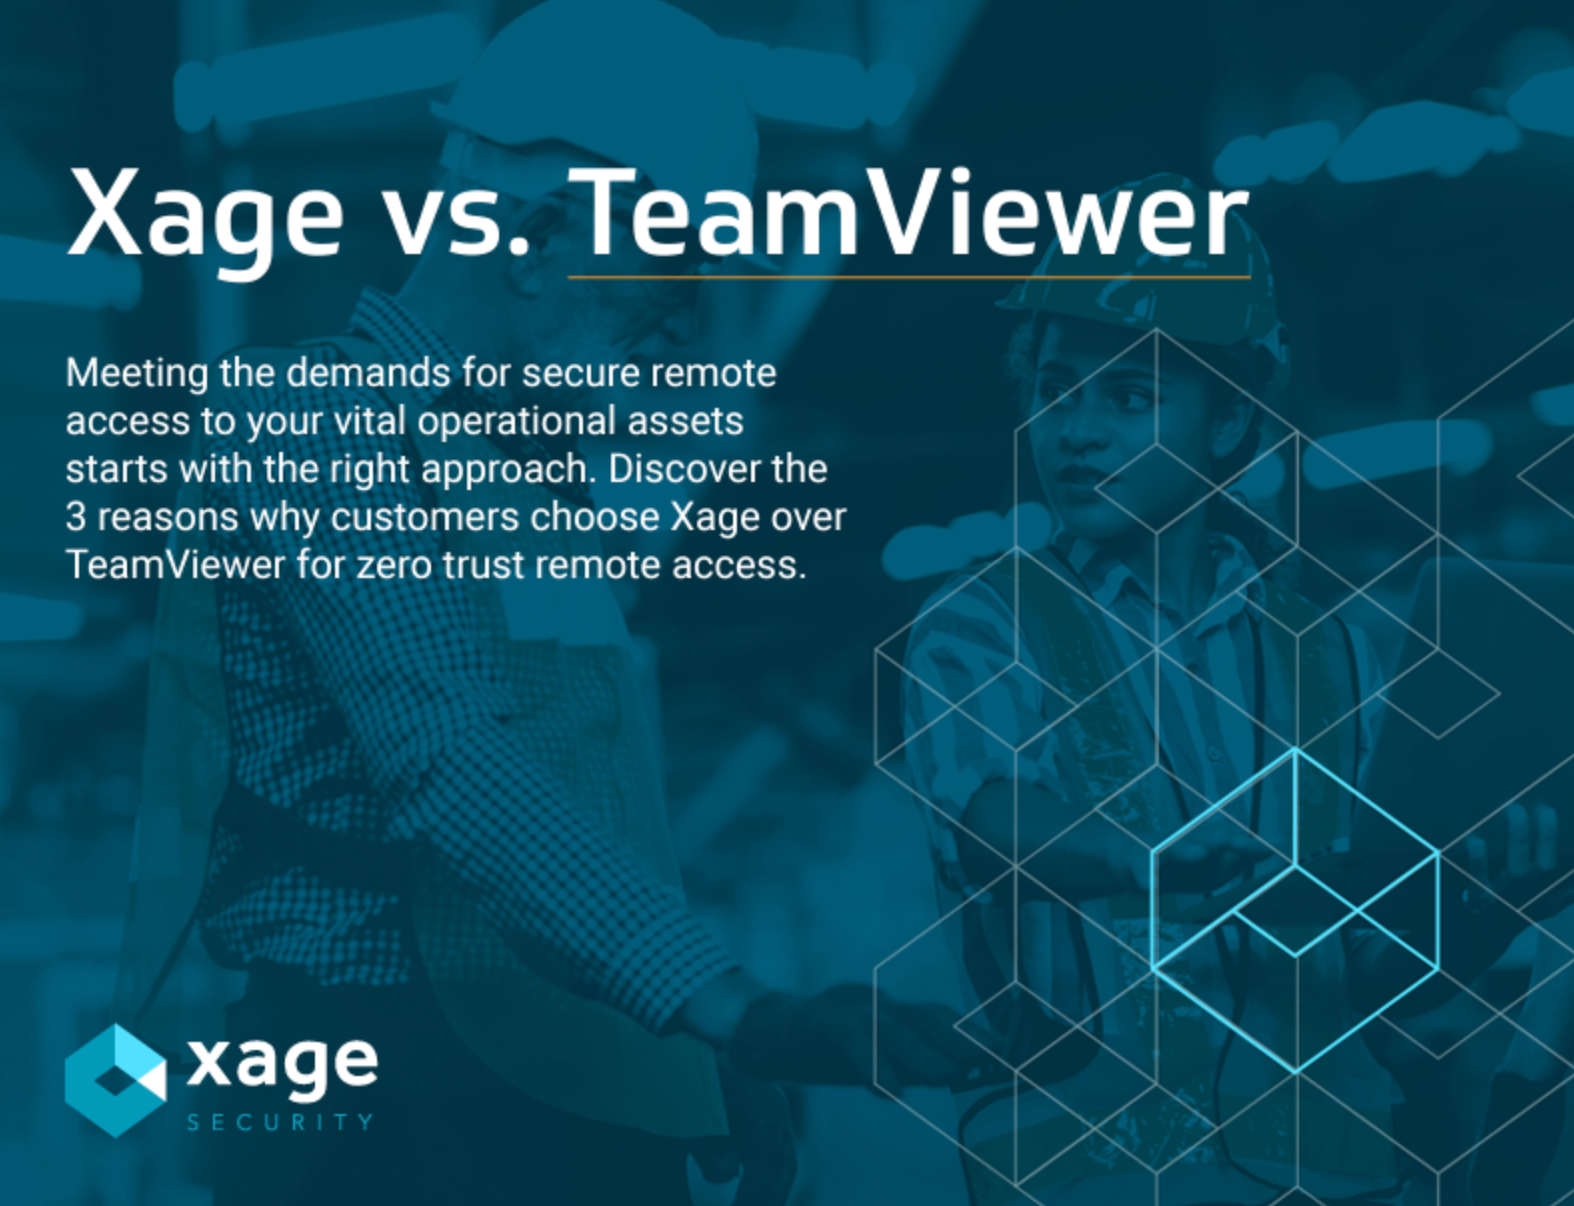 xage-vs-teamviewer-social-title-1